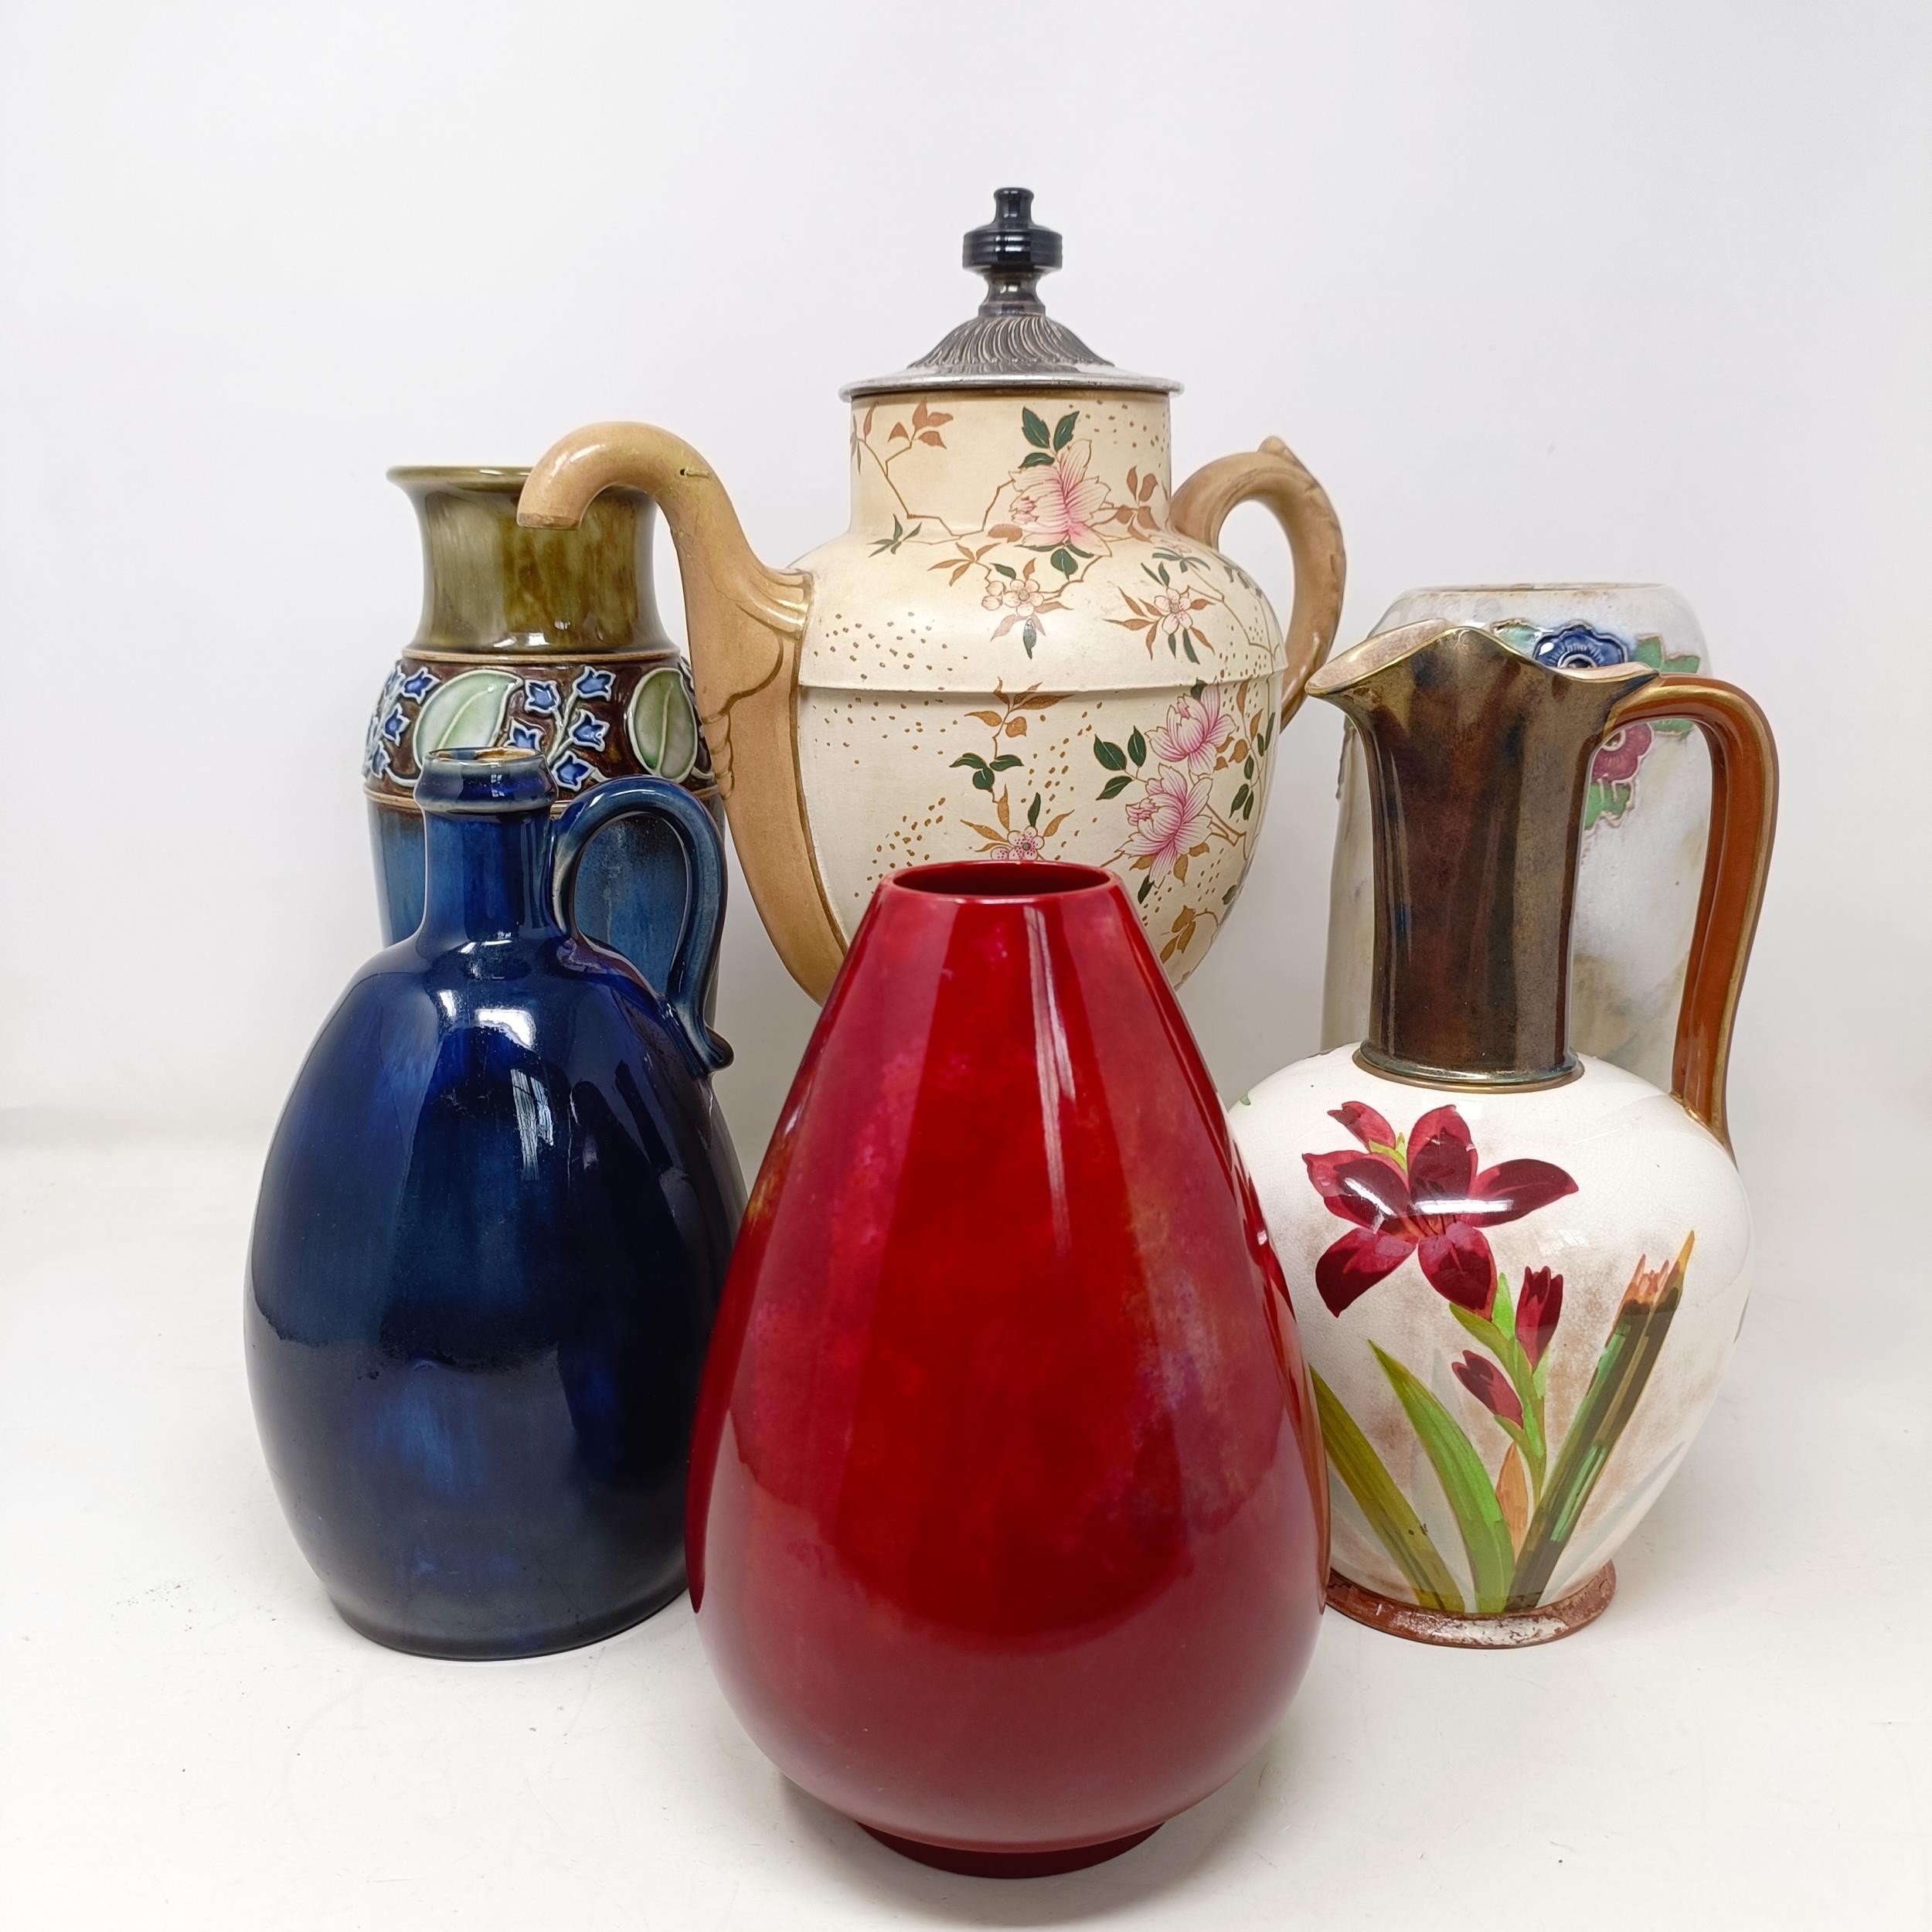 A Royal Doulton Flambé vase, 17 cm high, a Doulton Burslem teapot, two Doulton vases and two jugs (